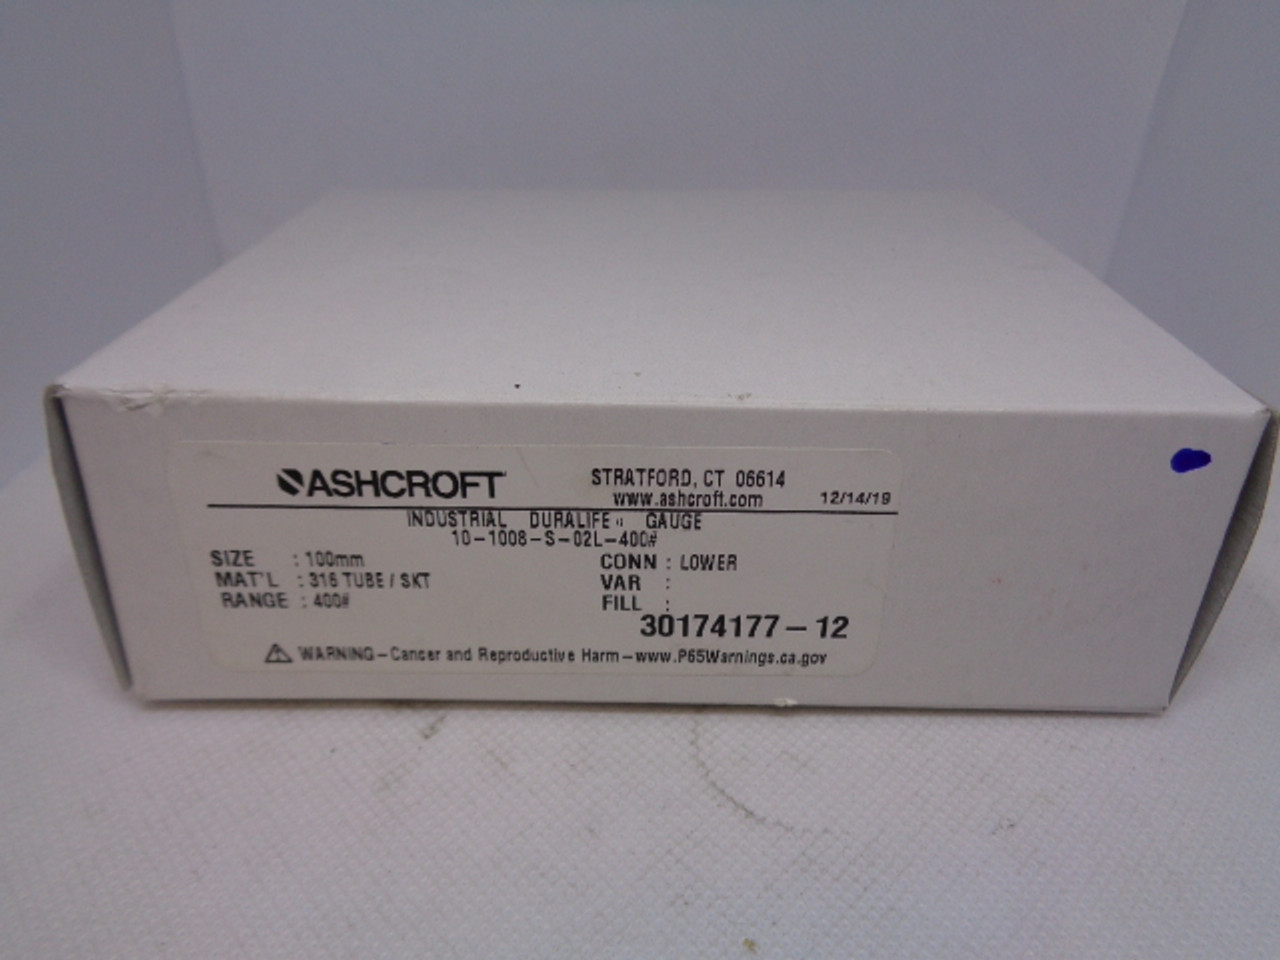 Ashcroft 10-1008-S-02L-400# Industrial Duralife Gauge, 100mm